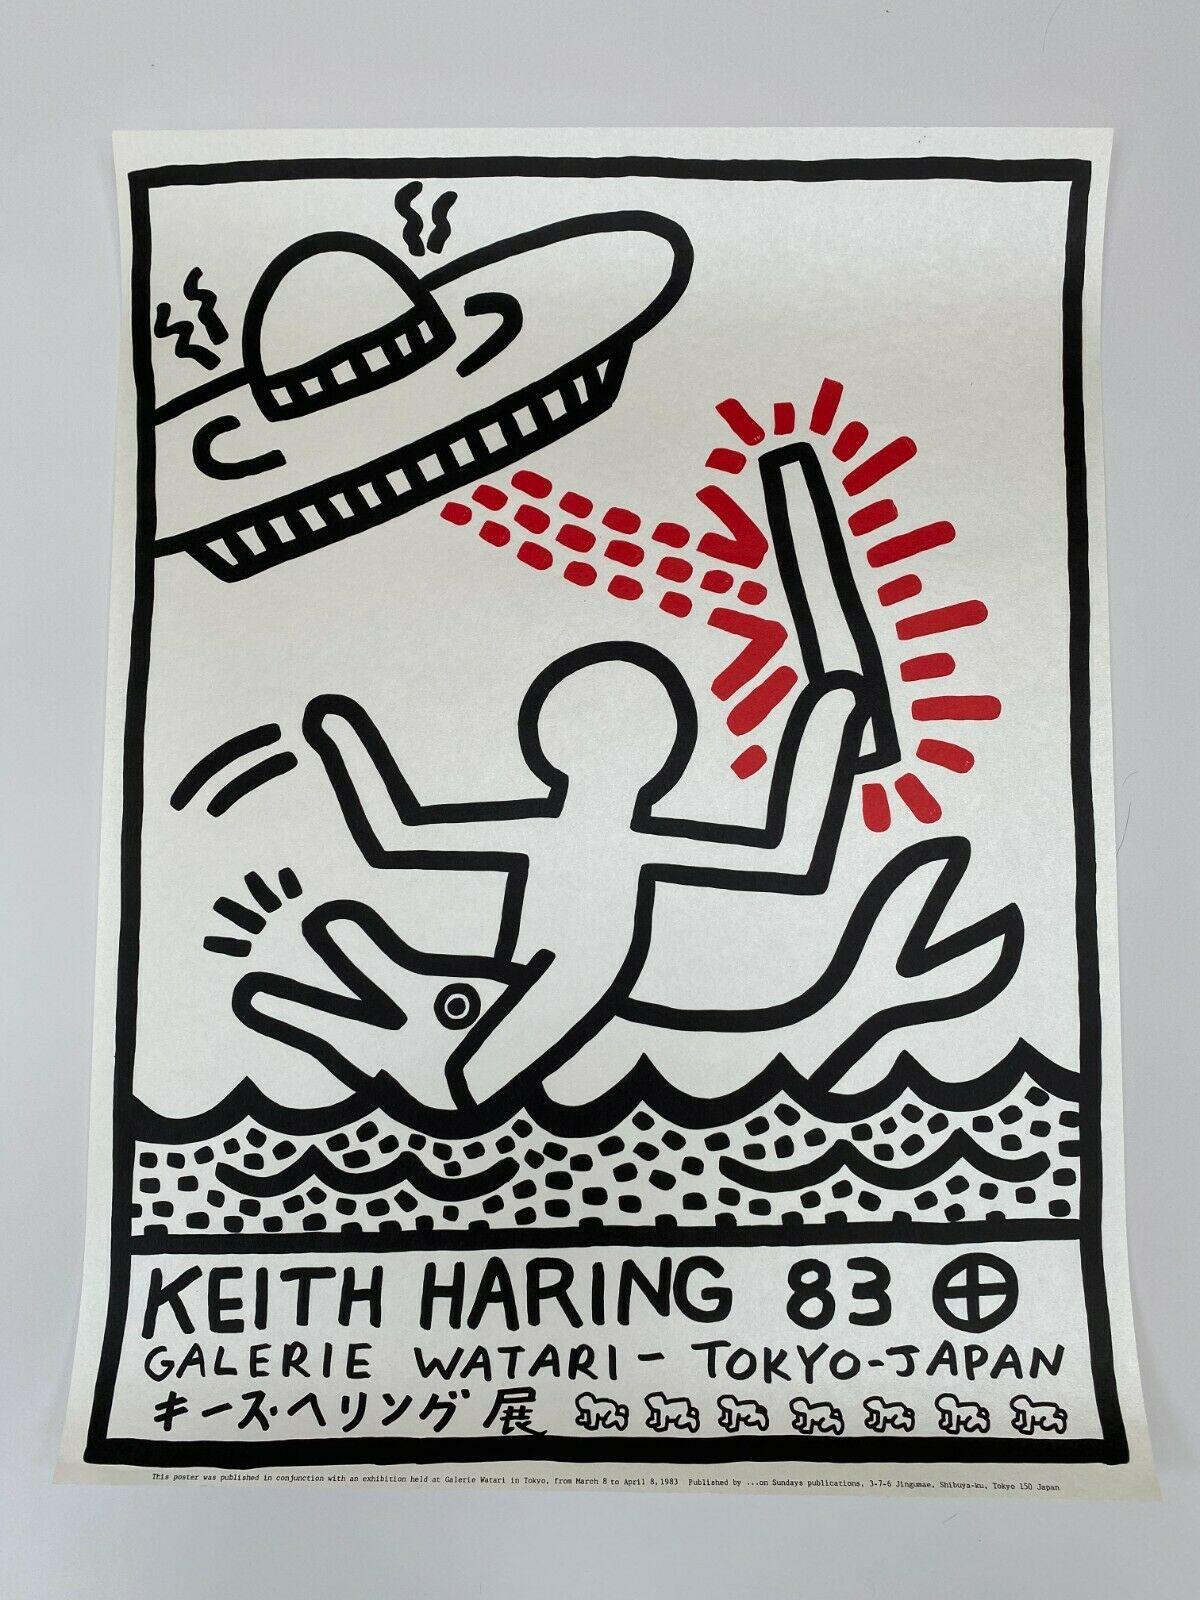 keith haring exhibition poster galerie watari